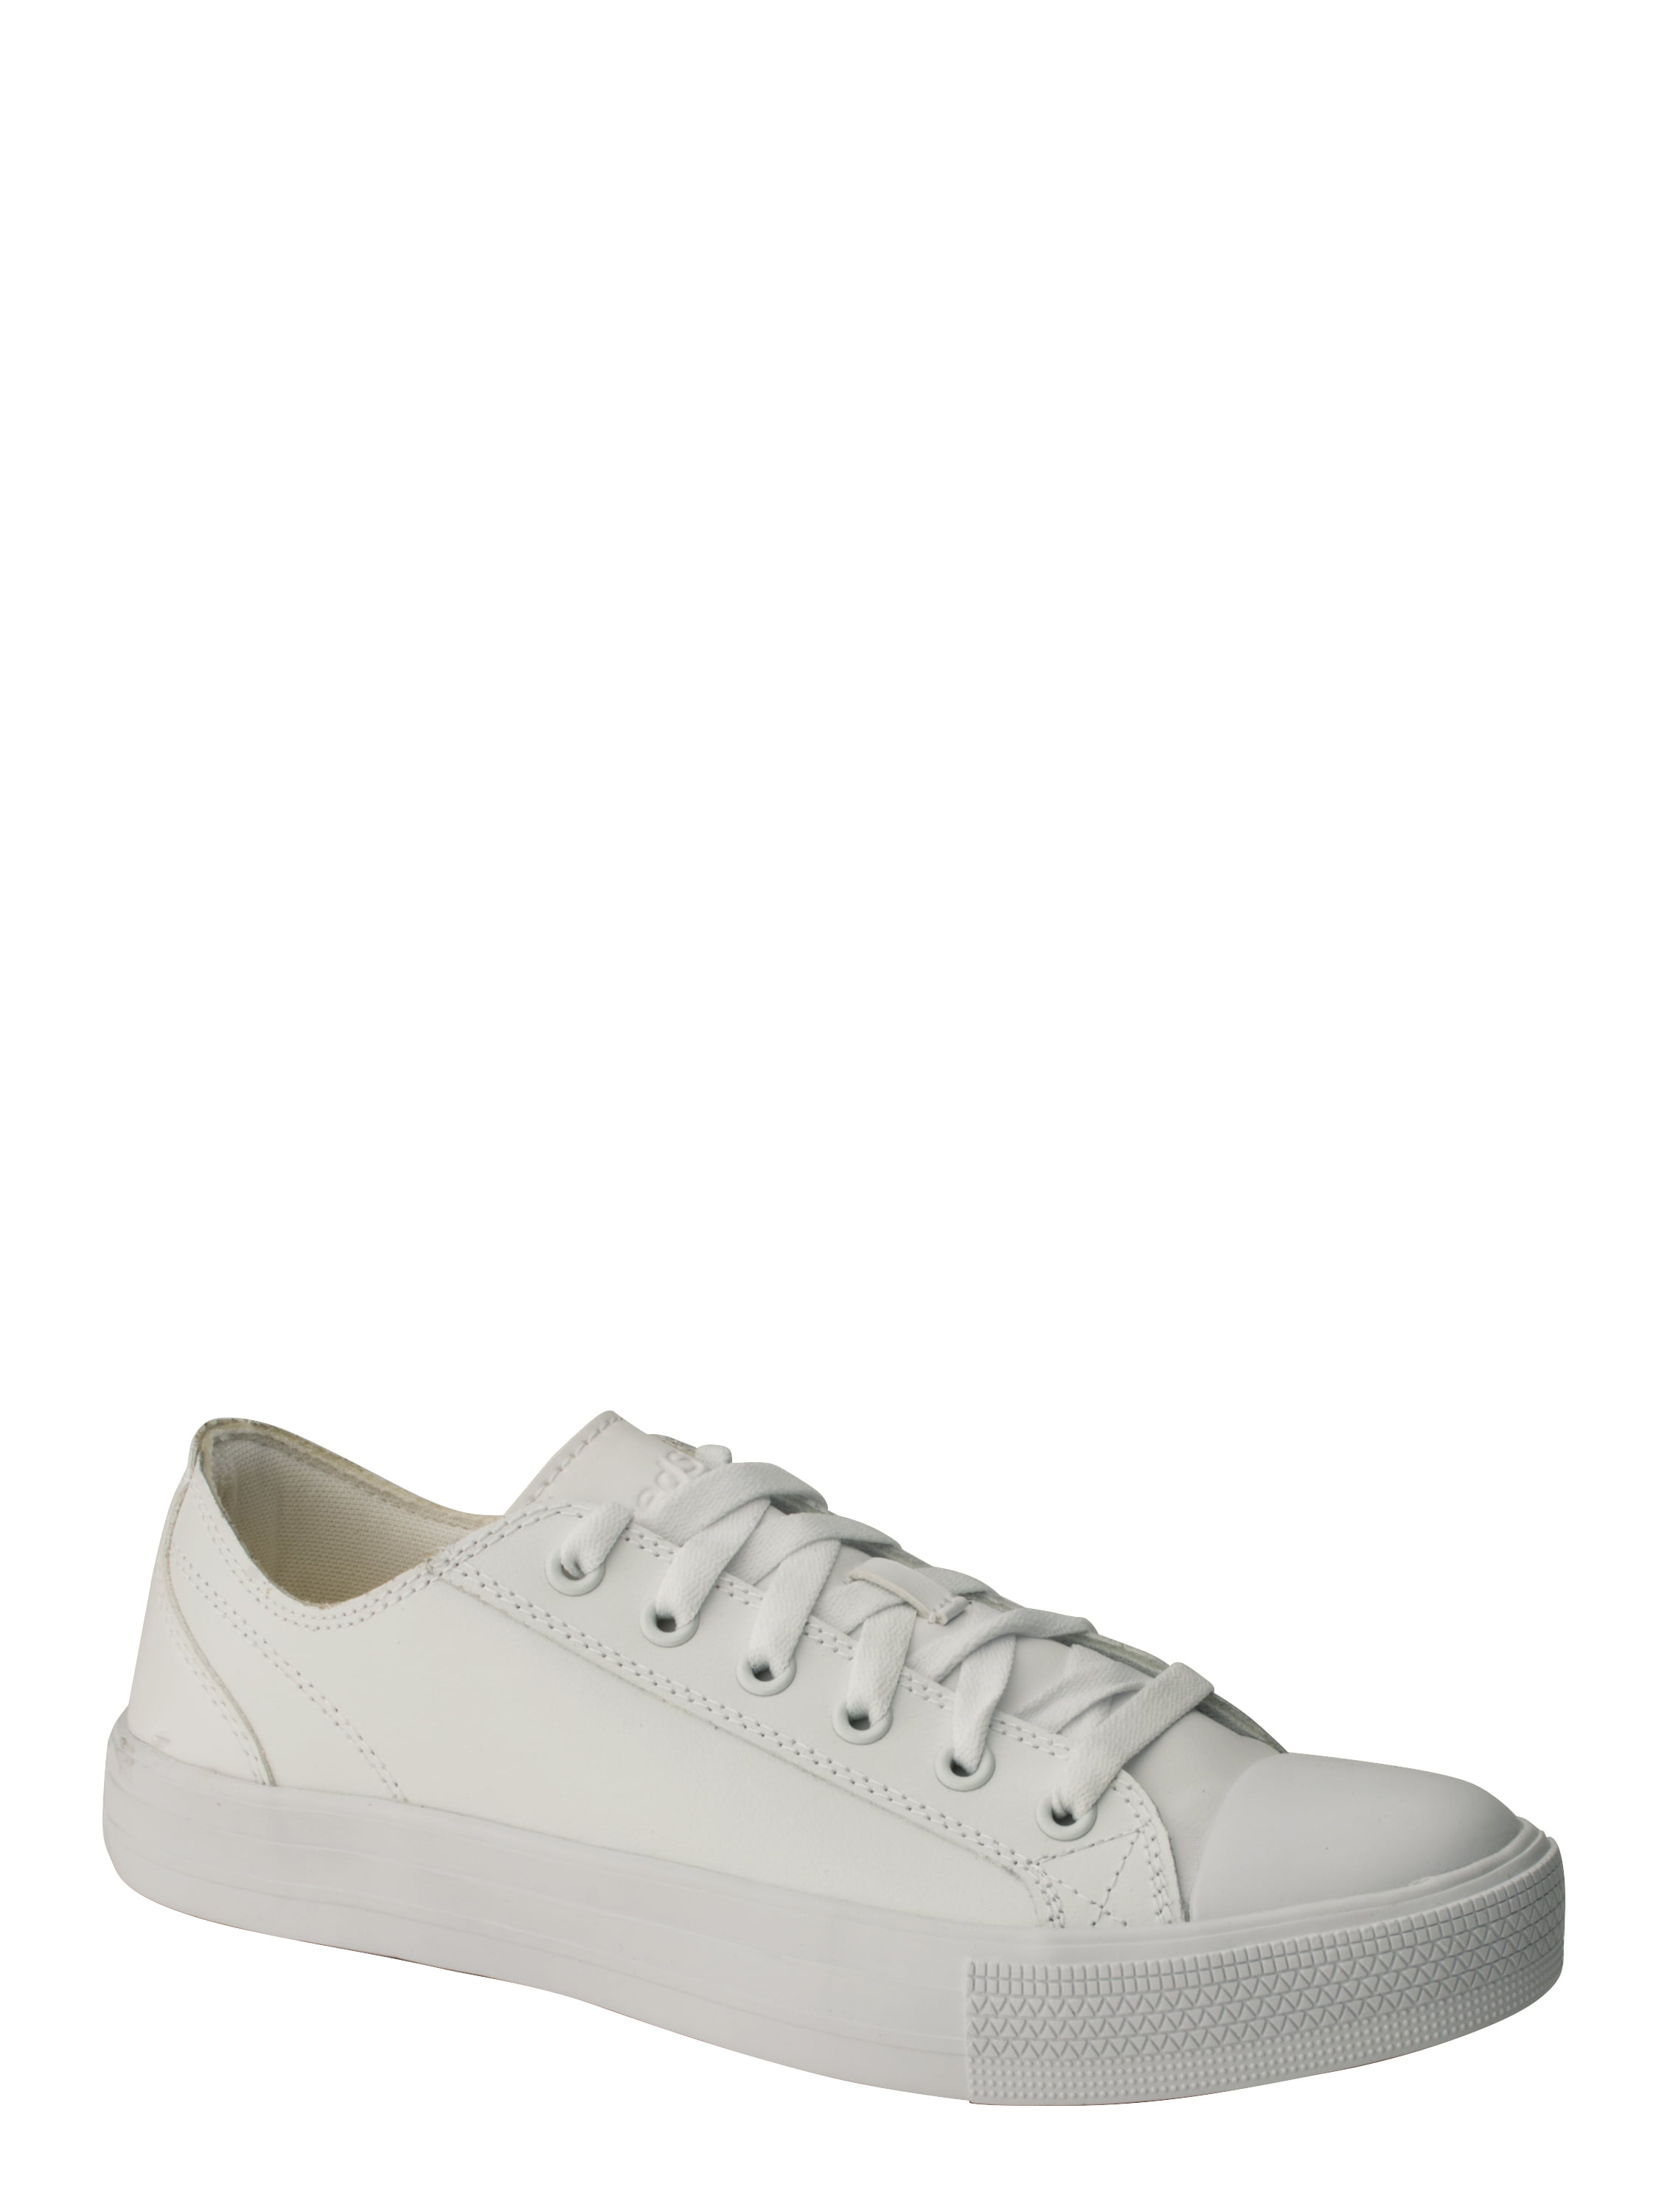 Buy > white non slip shoes walmart > in stock